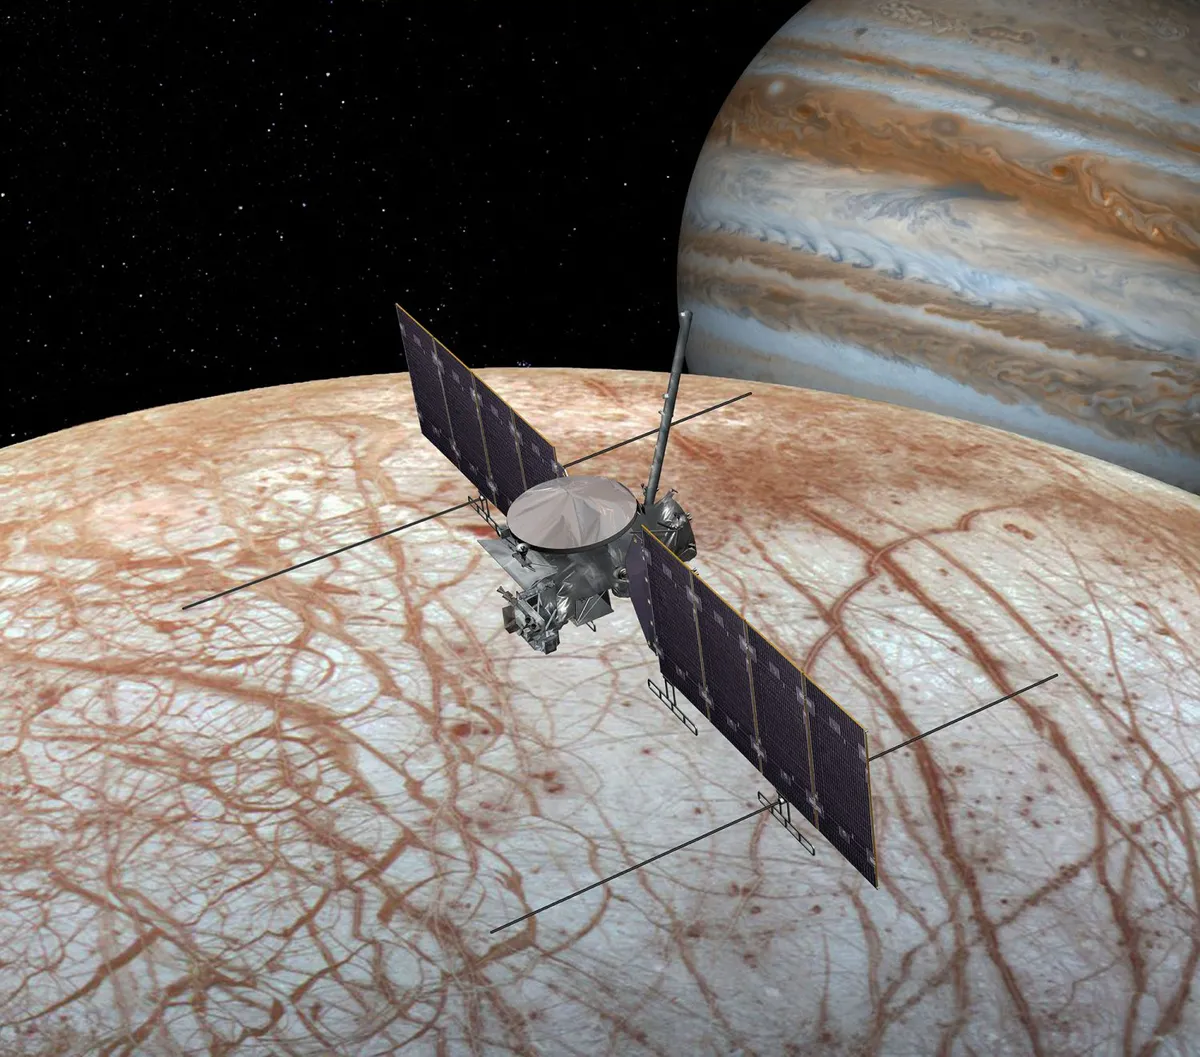 An artist's impression of the Europa Clipper exploring Jupiter's moon Europa. Credit: NASA/JPL-Caltech